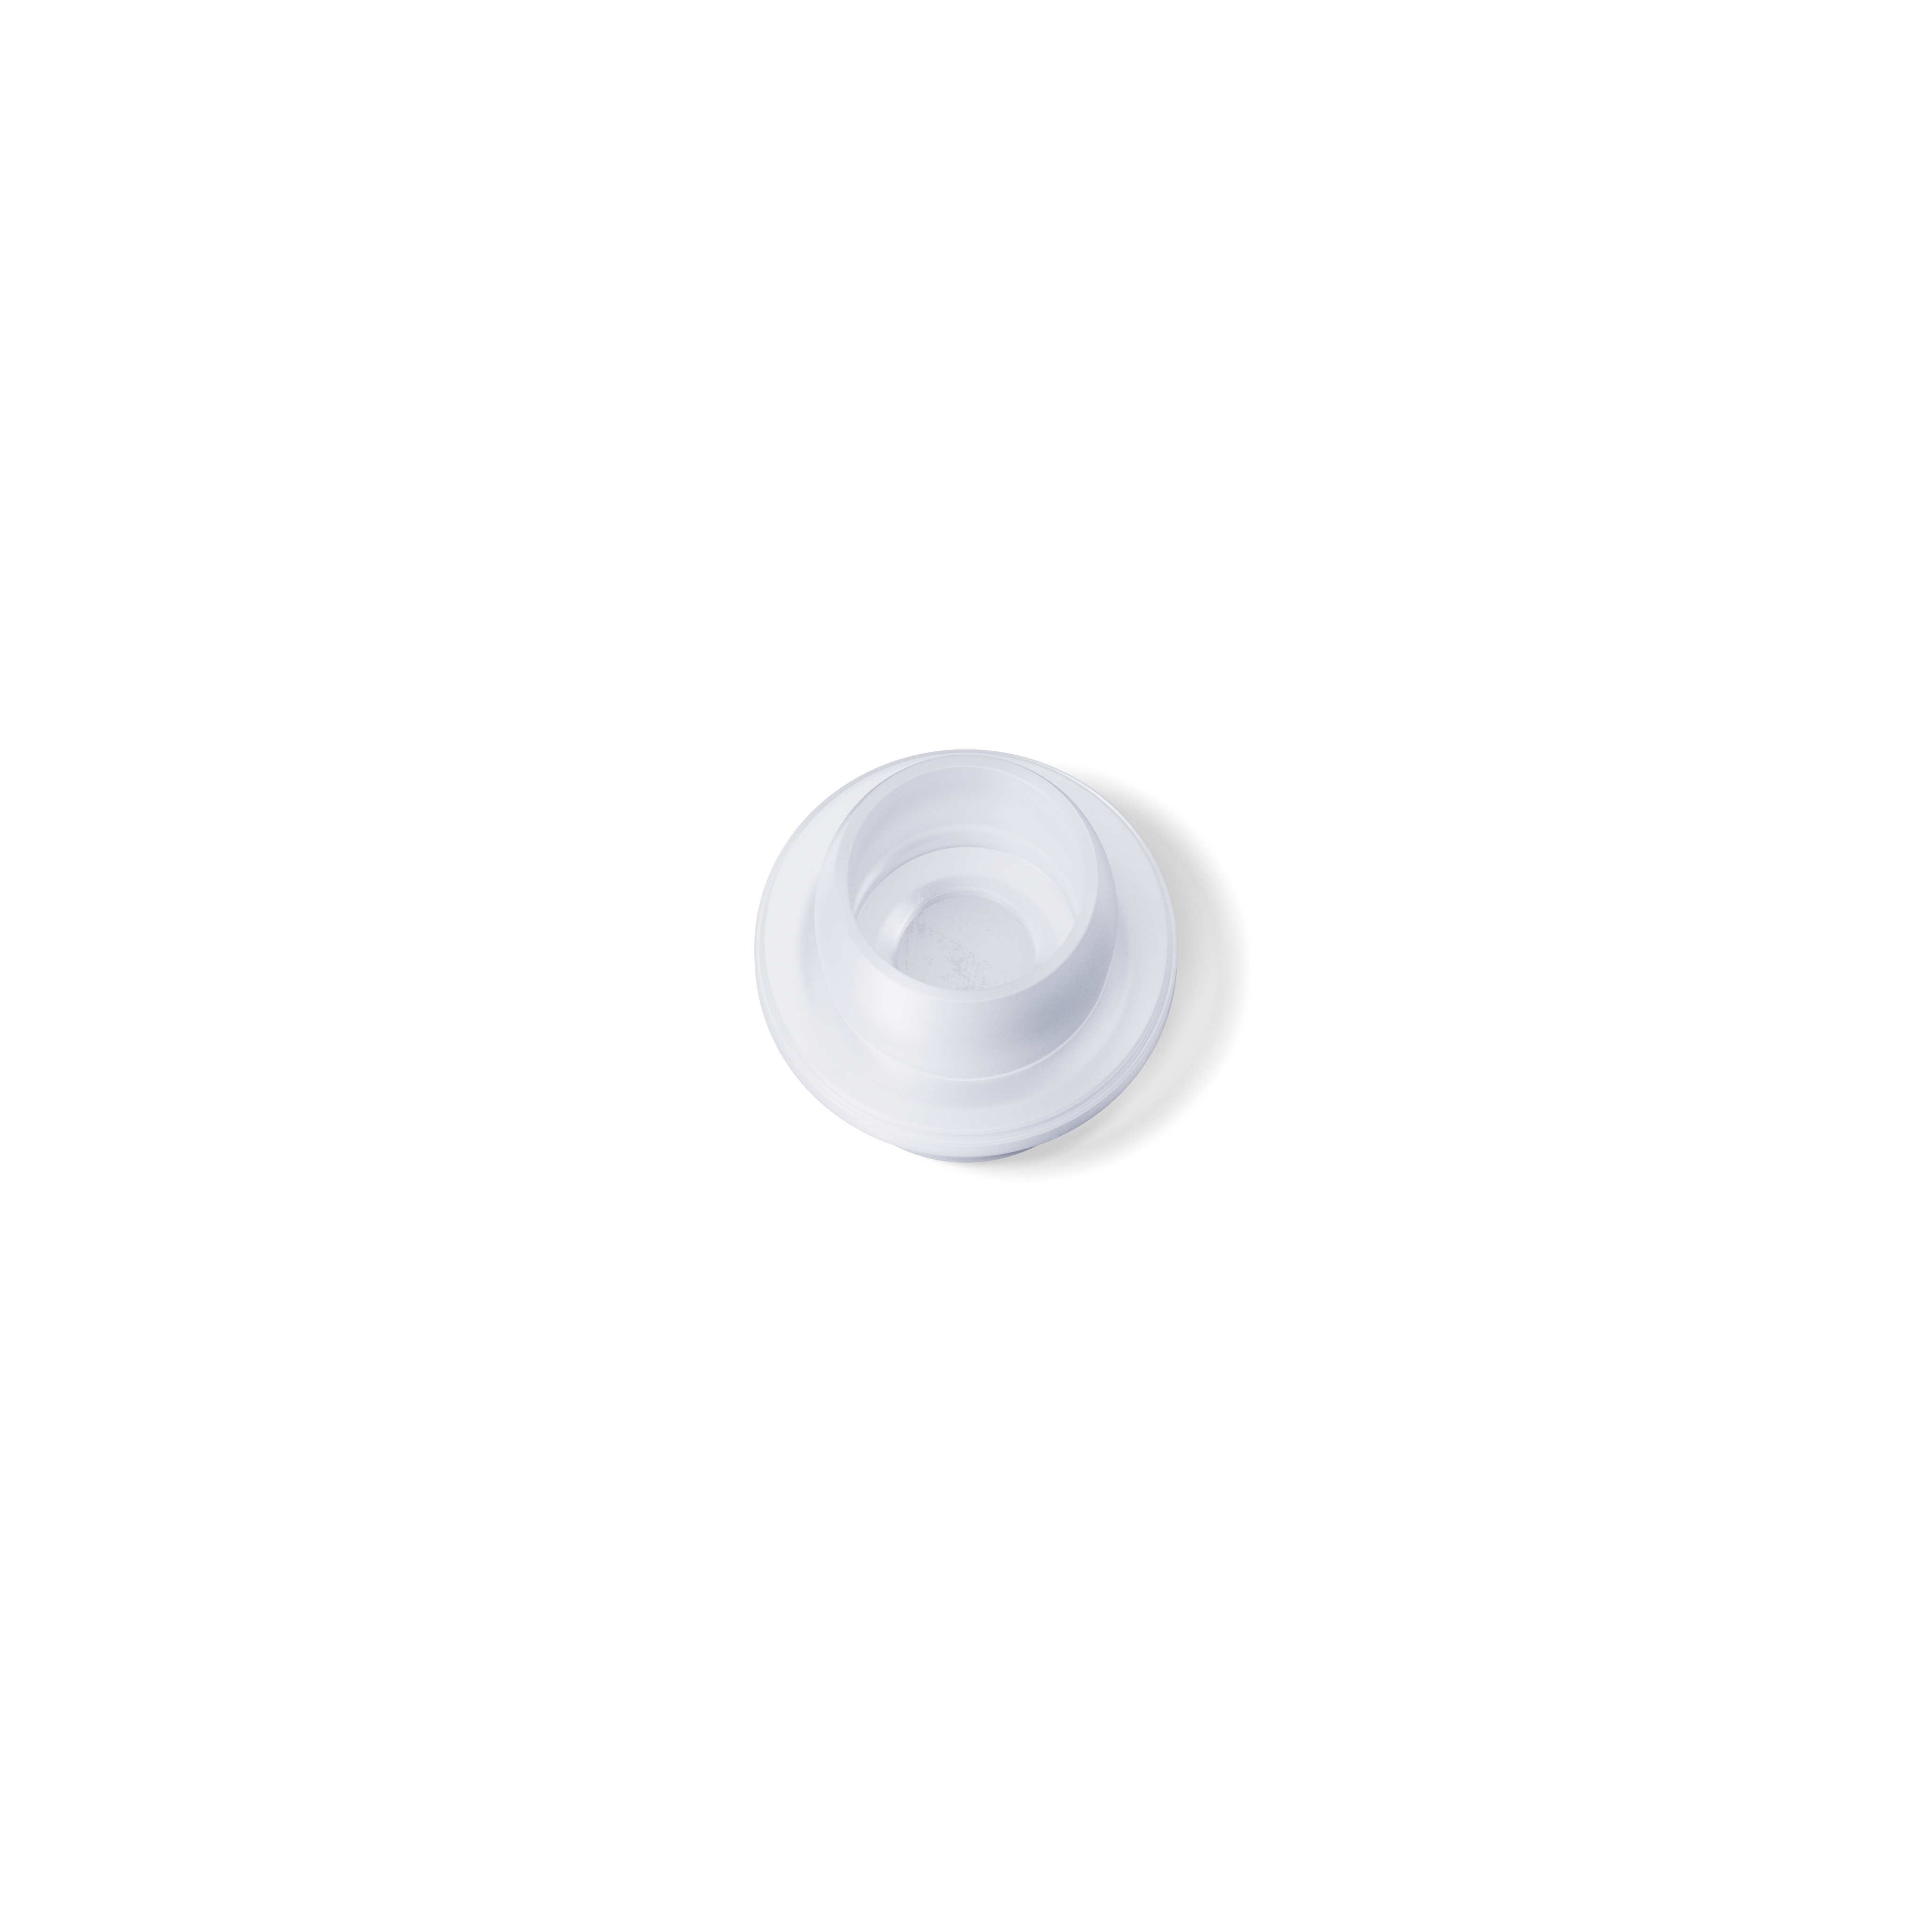 Roll-on cap DIN18, Urea, natural fitment, matte plastic ball, black cap (Orion)